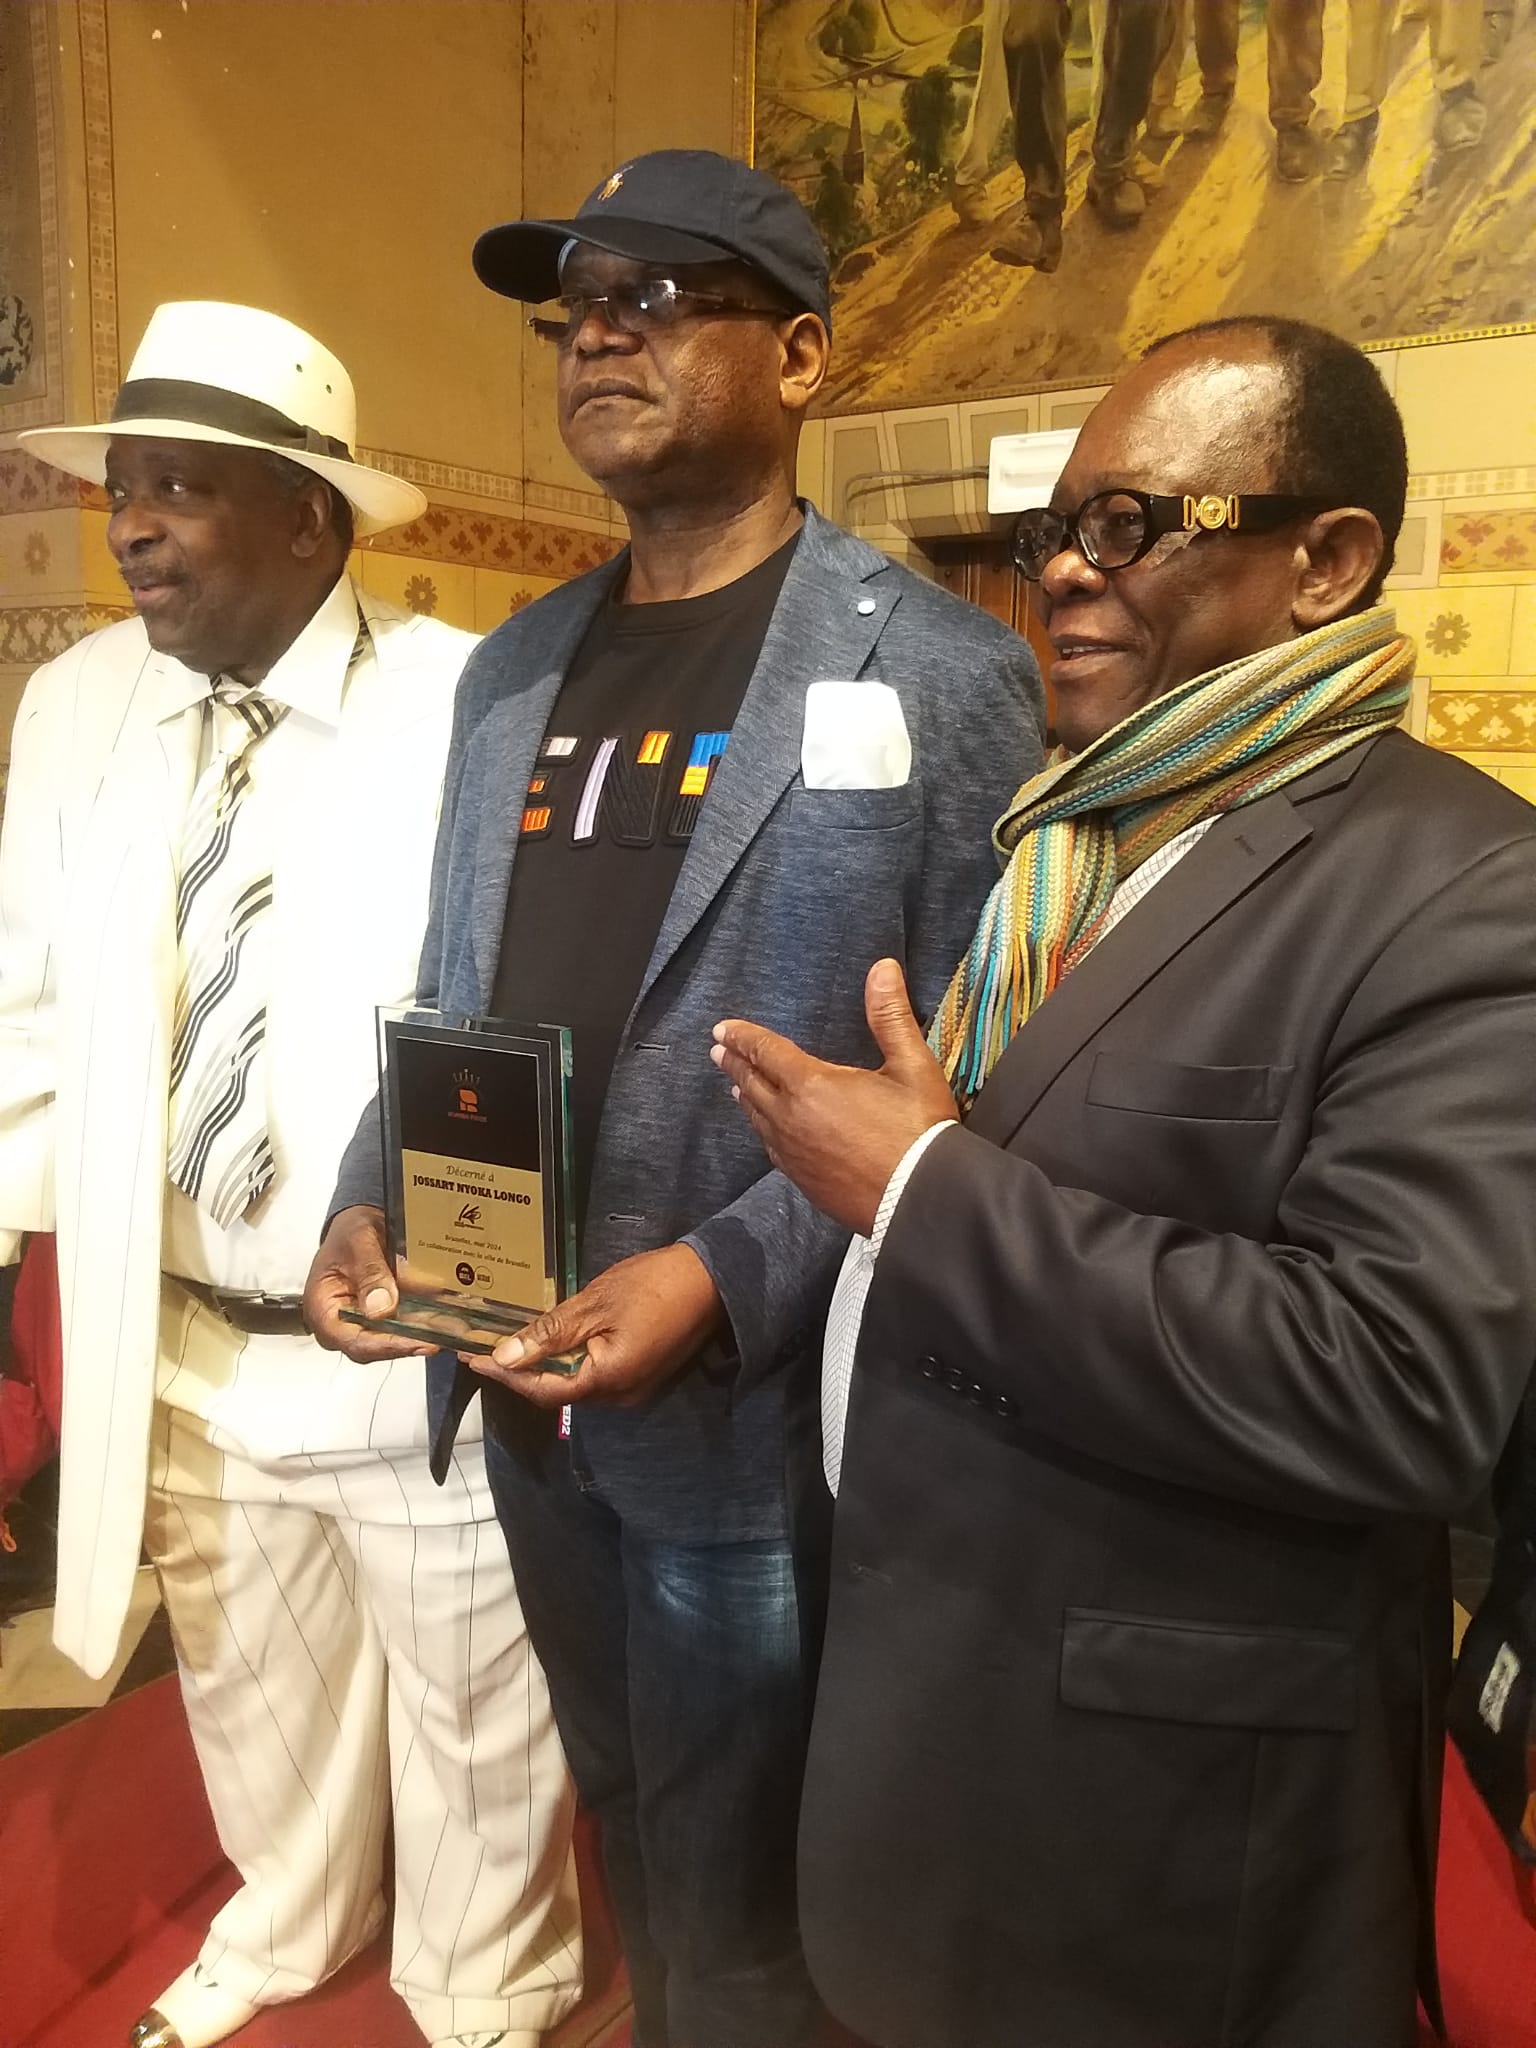 Le trophée “Rumba Prize” récompense Jossart Nyoka Longo